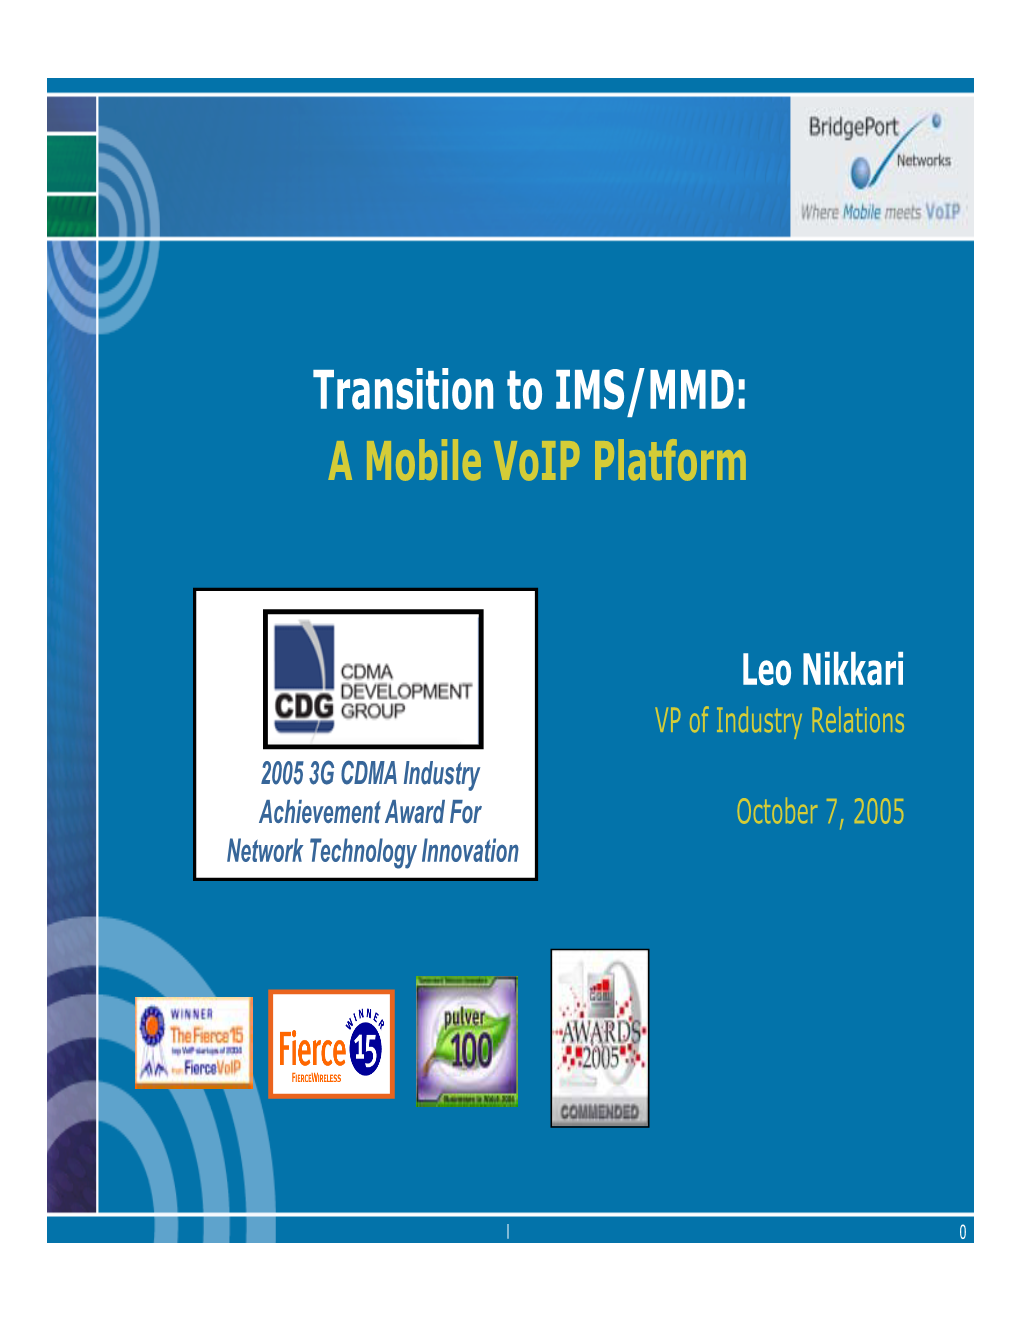 A Mobile Voip Platform